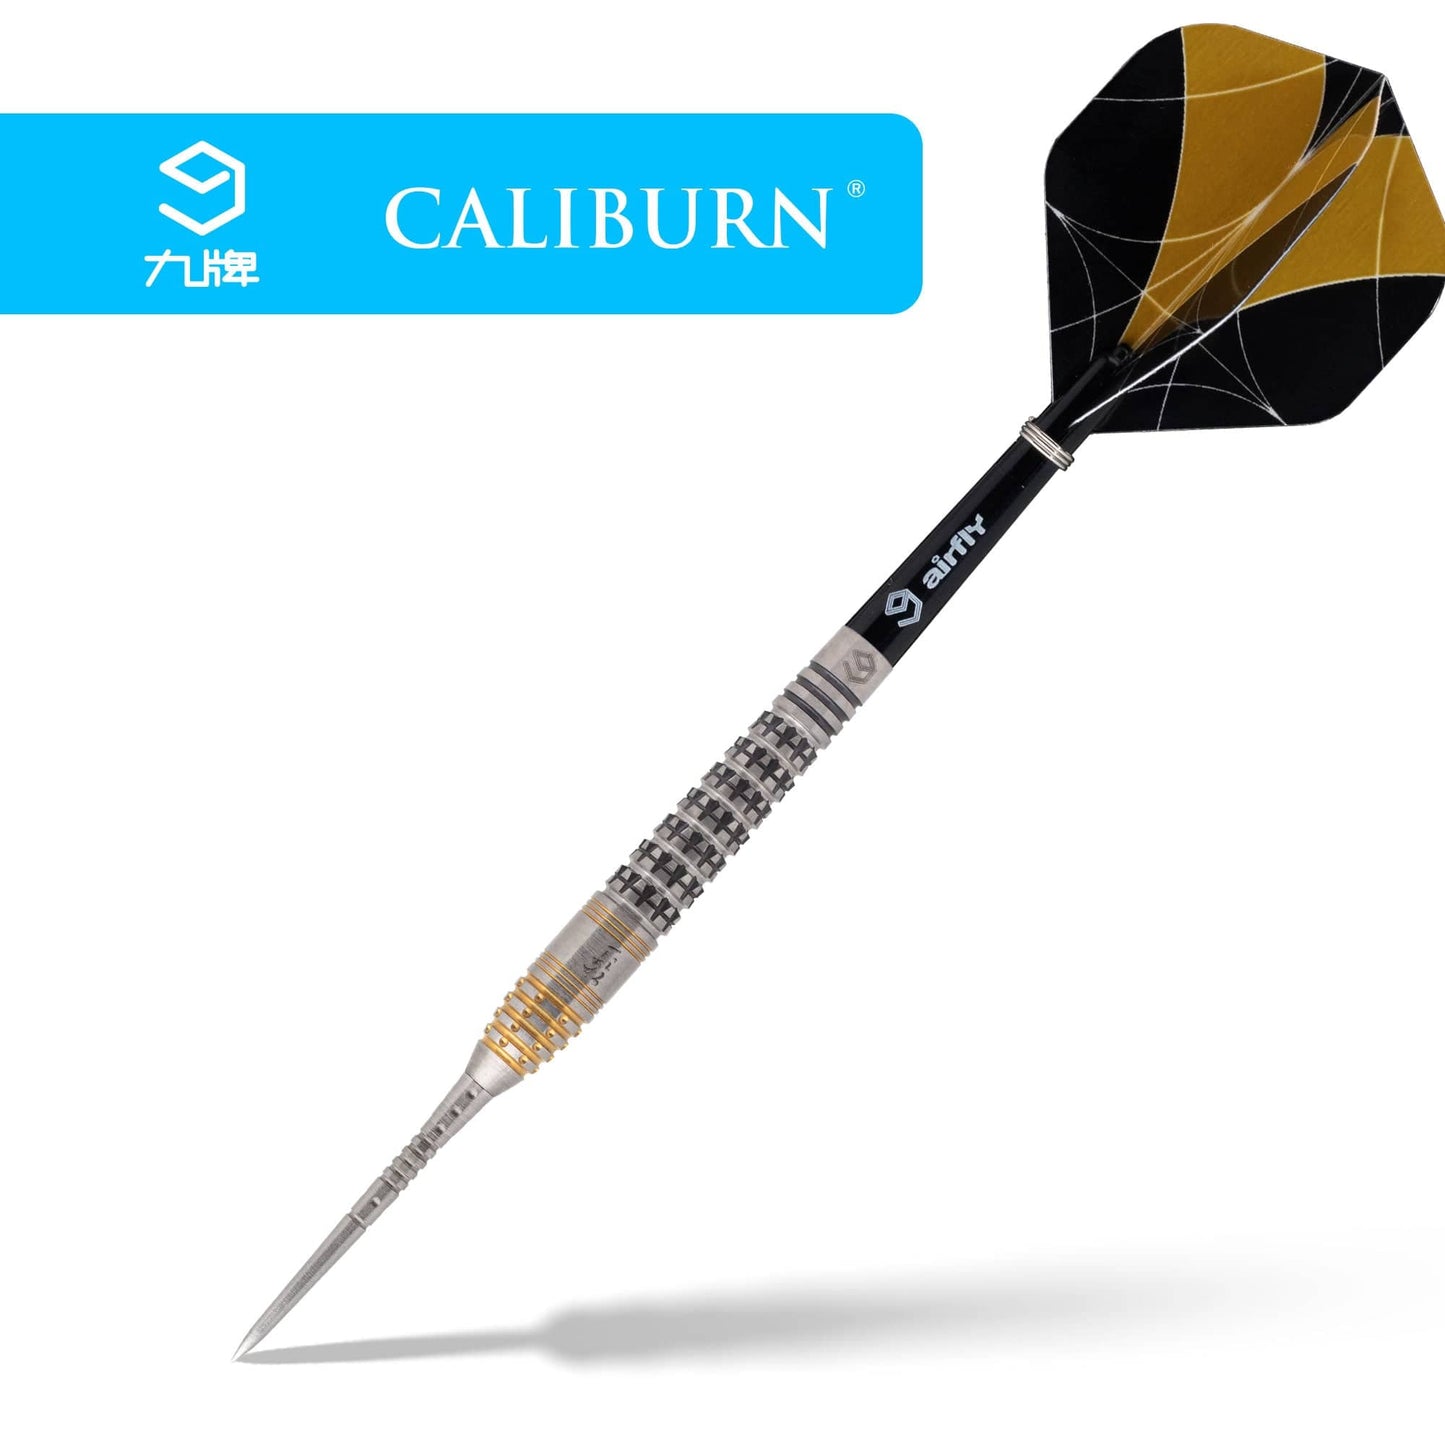 Caliburn Player Darts - Steel Tip - 90% - Silver & Gold - Han